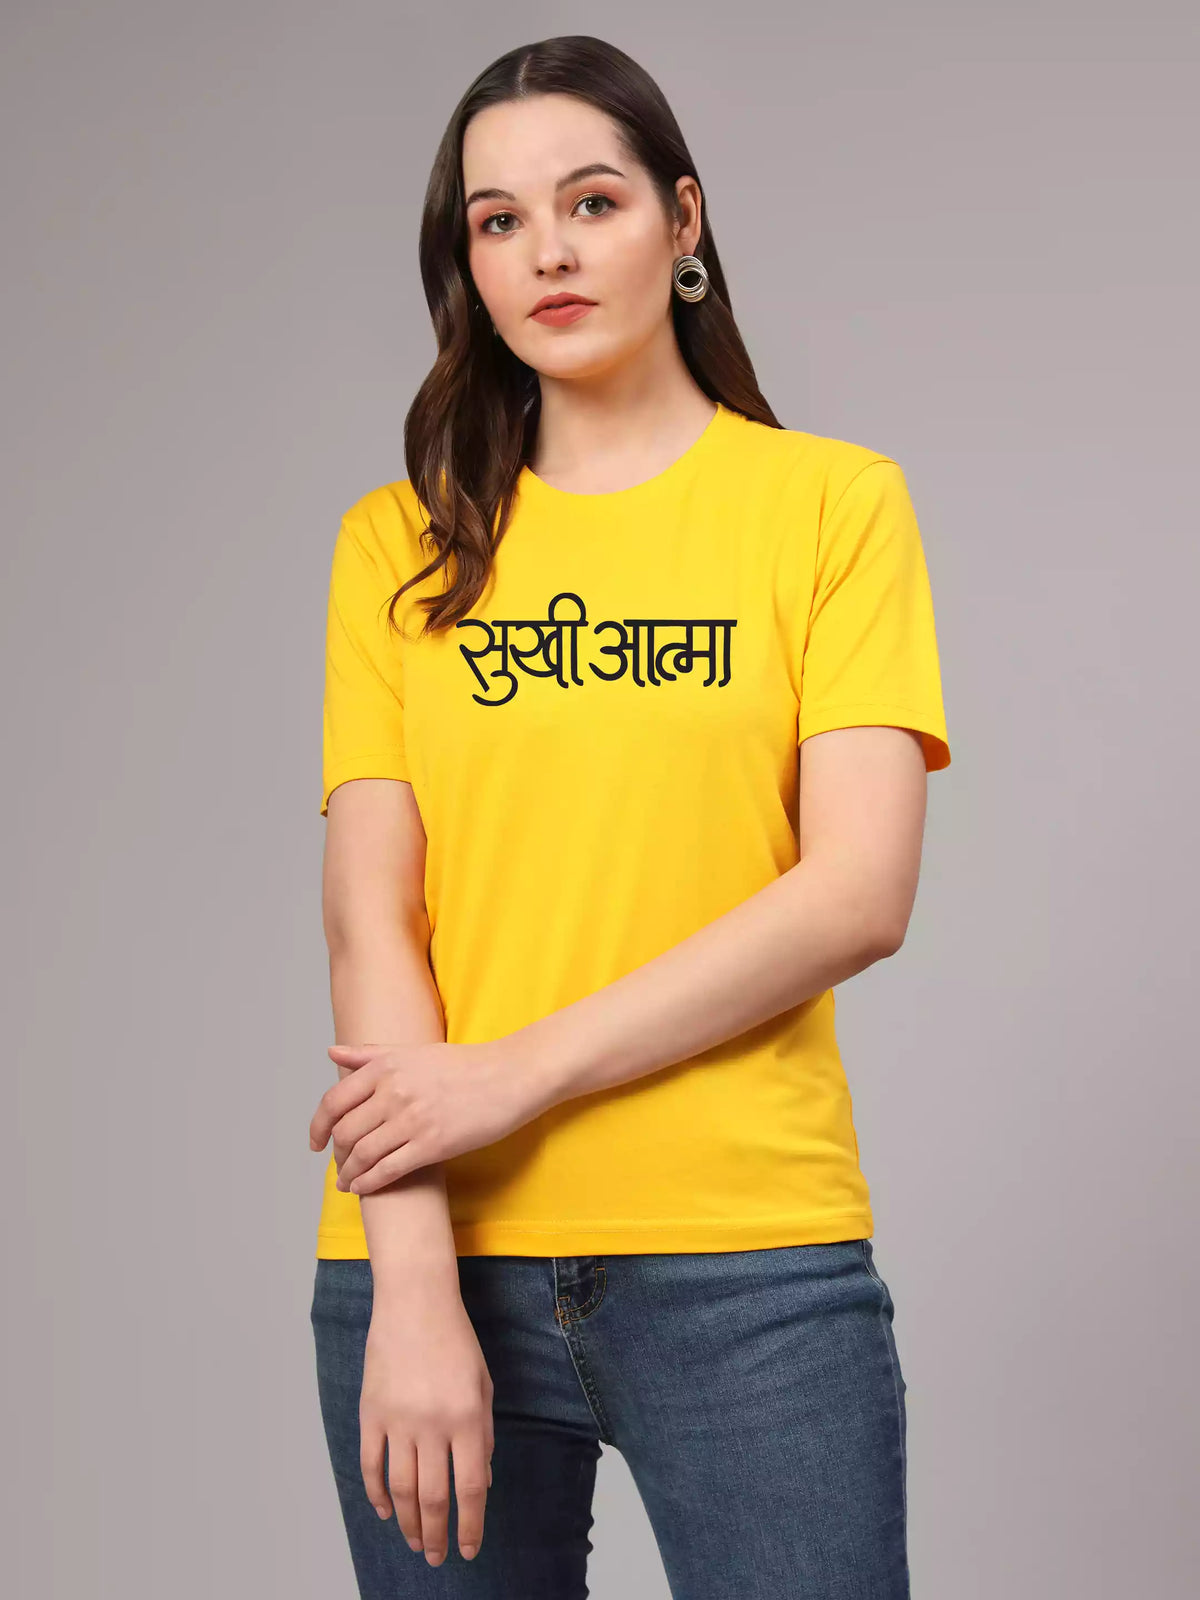 Sukhiaatma  - Sukhiaatma Unisex Graphic Printed Yellow T-shirt